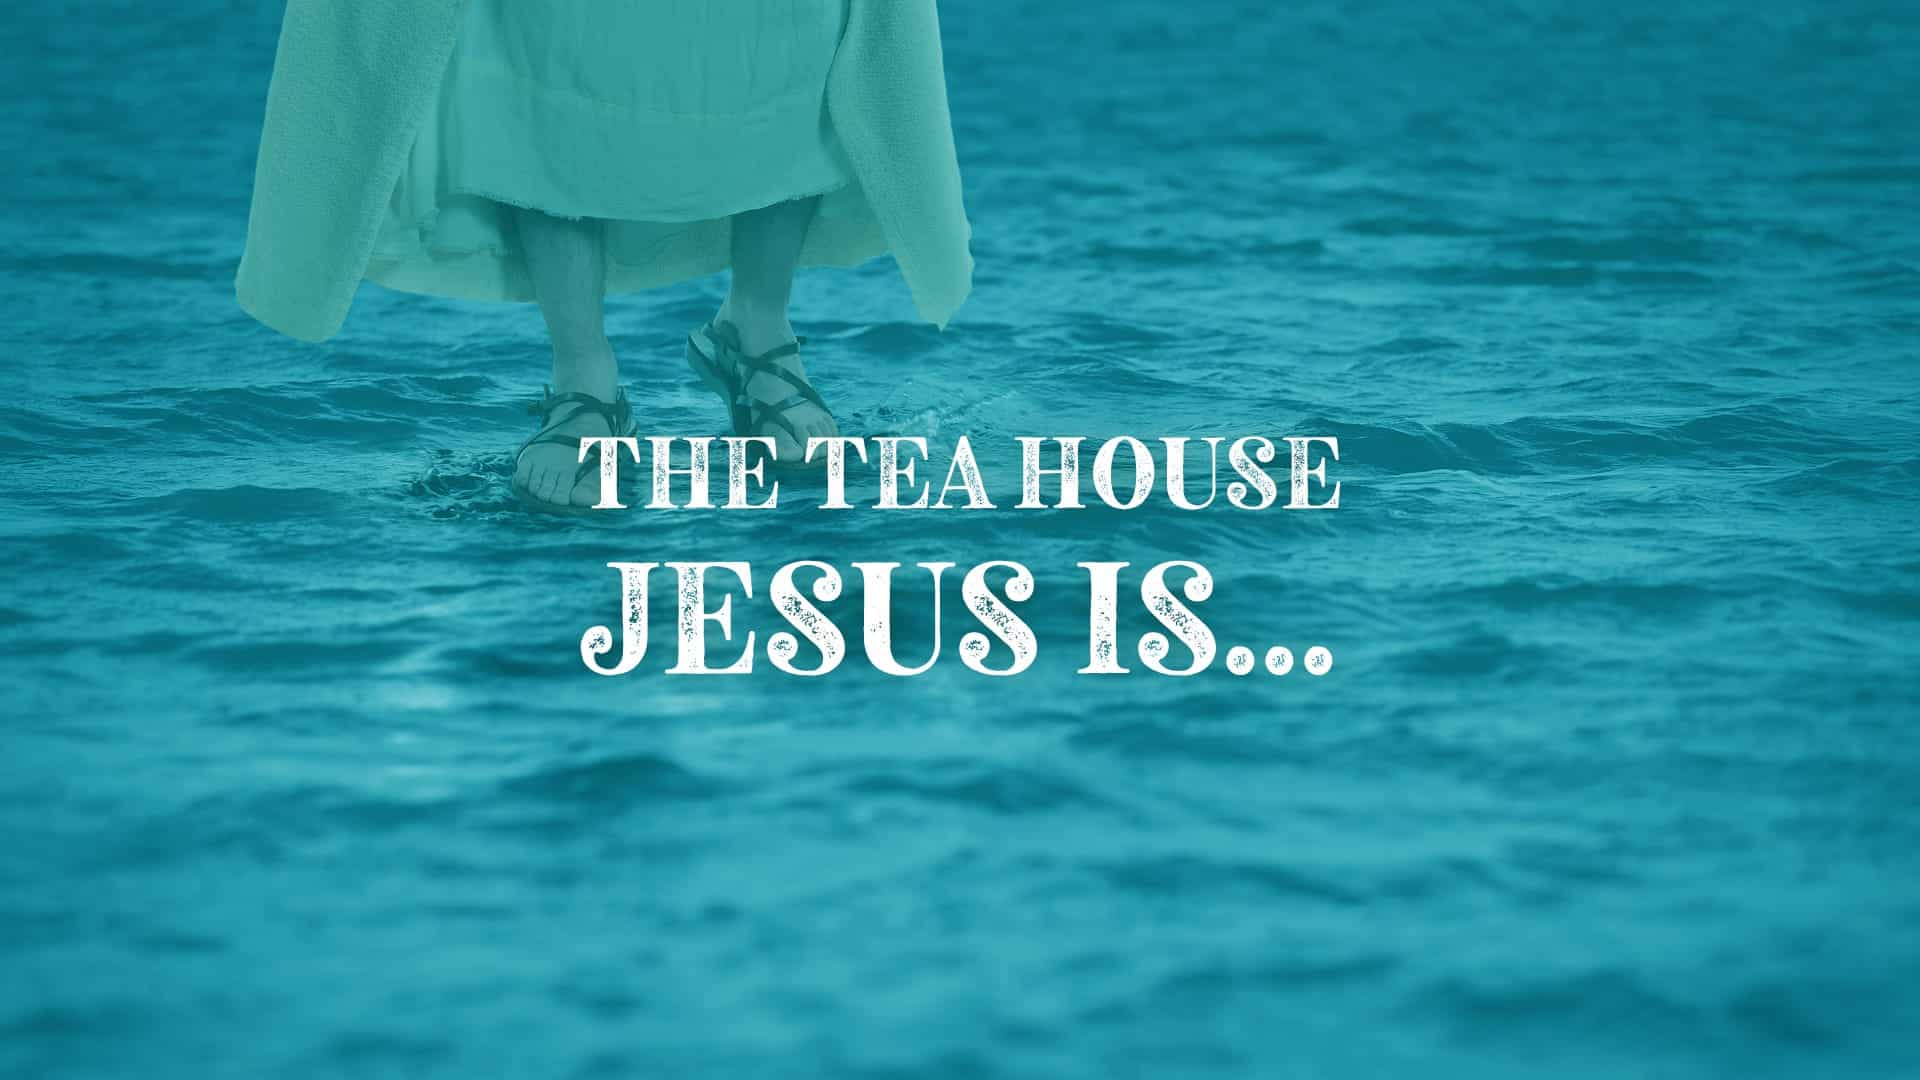 The Tea House - Jesus Is...